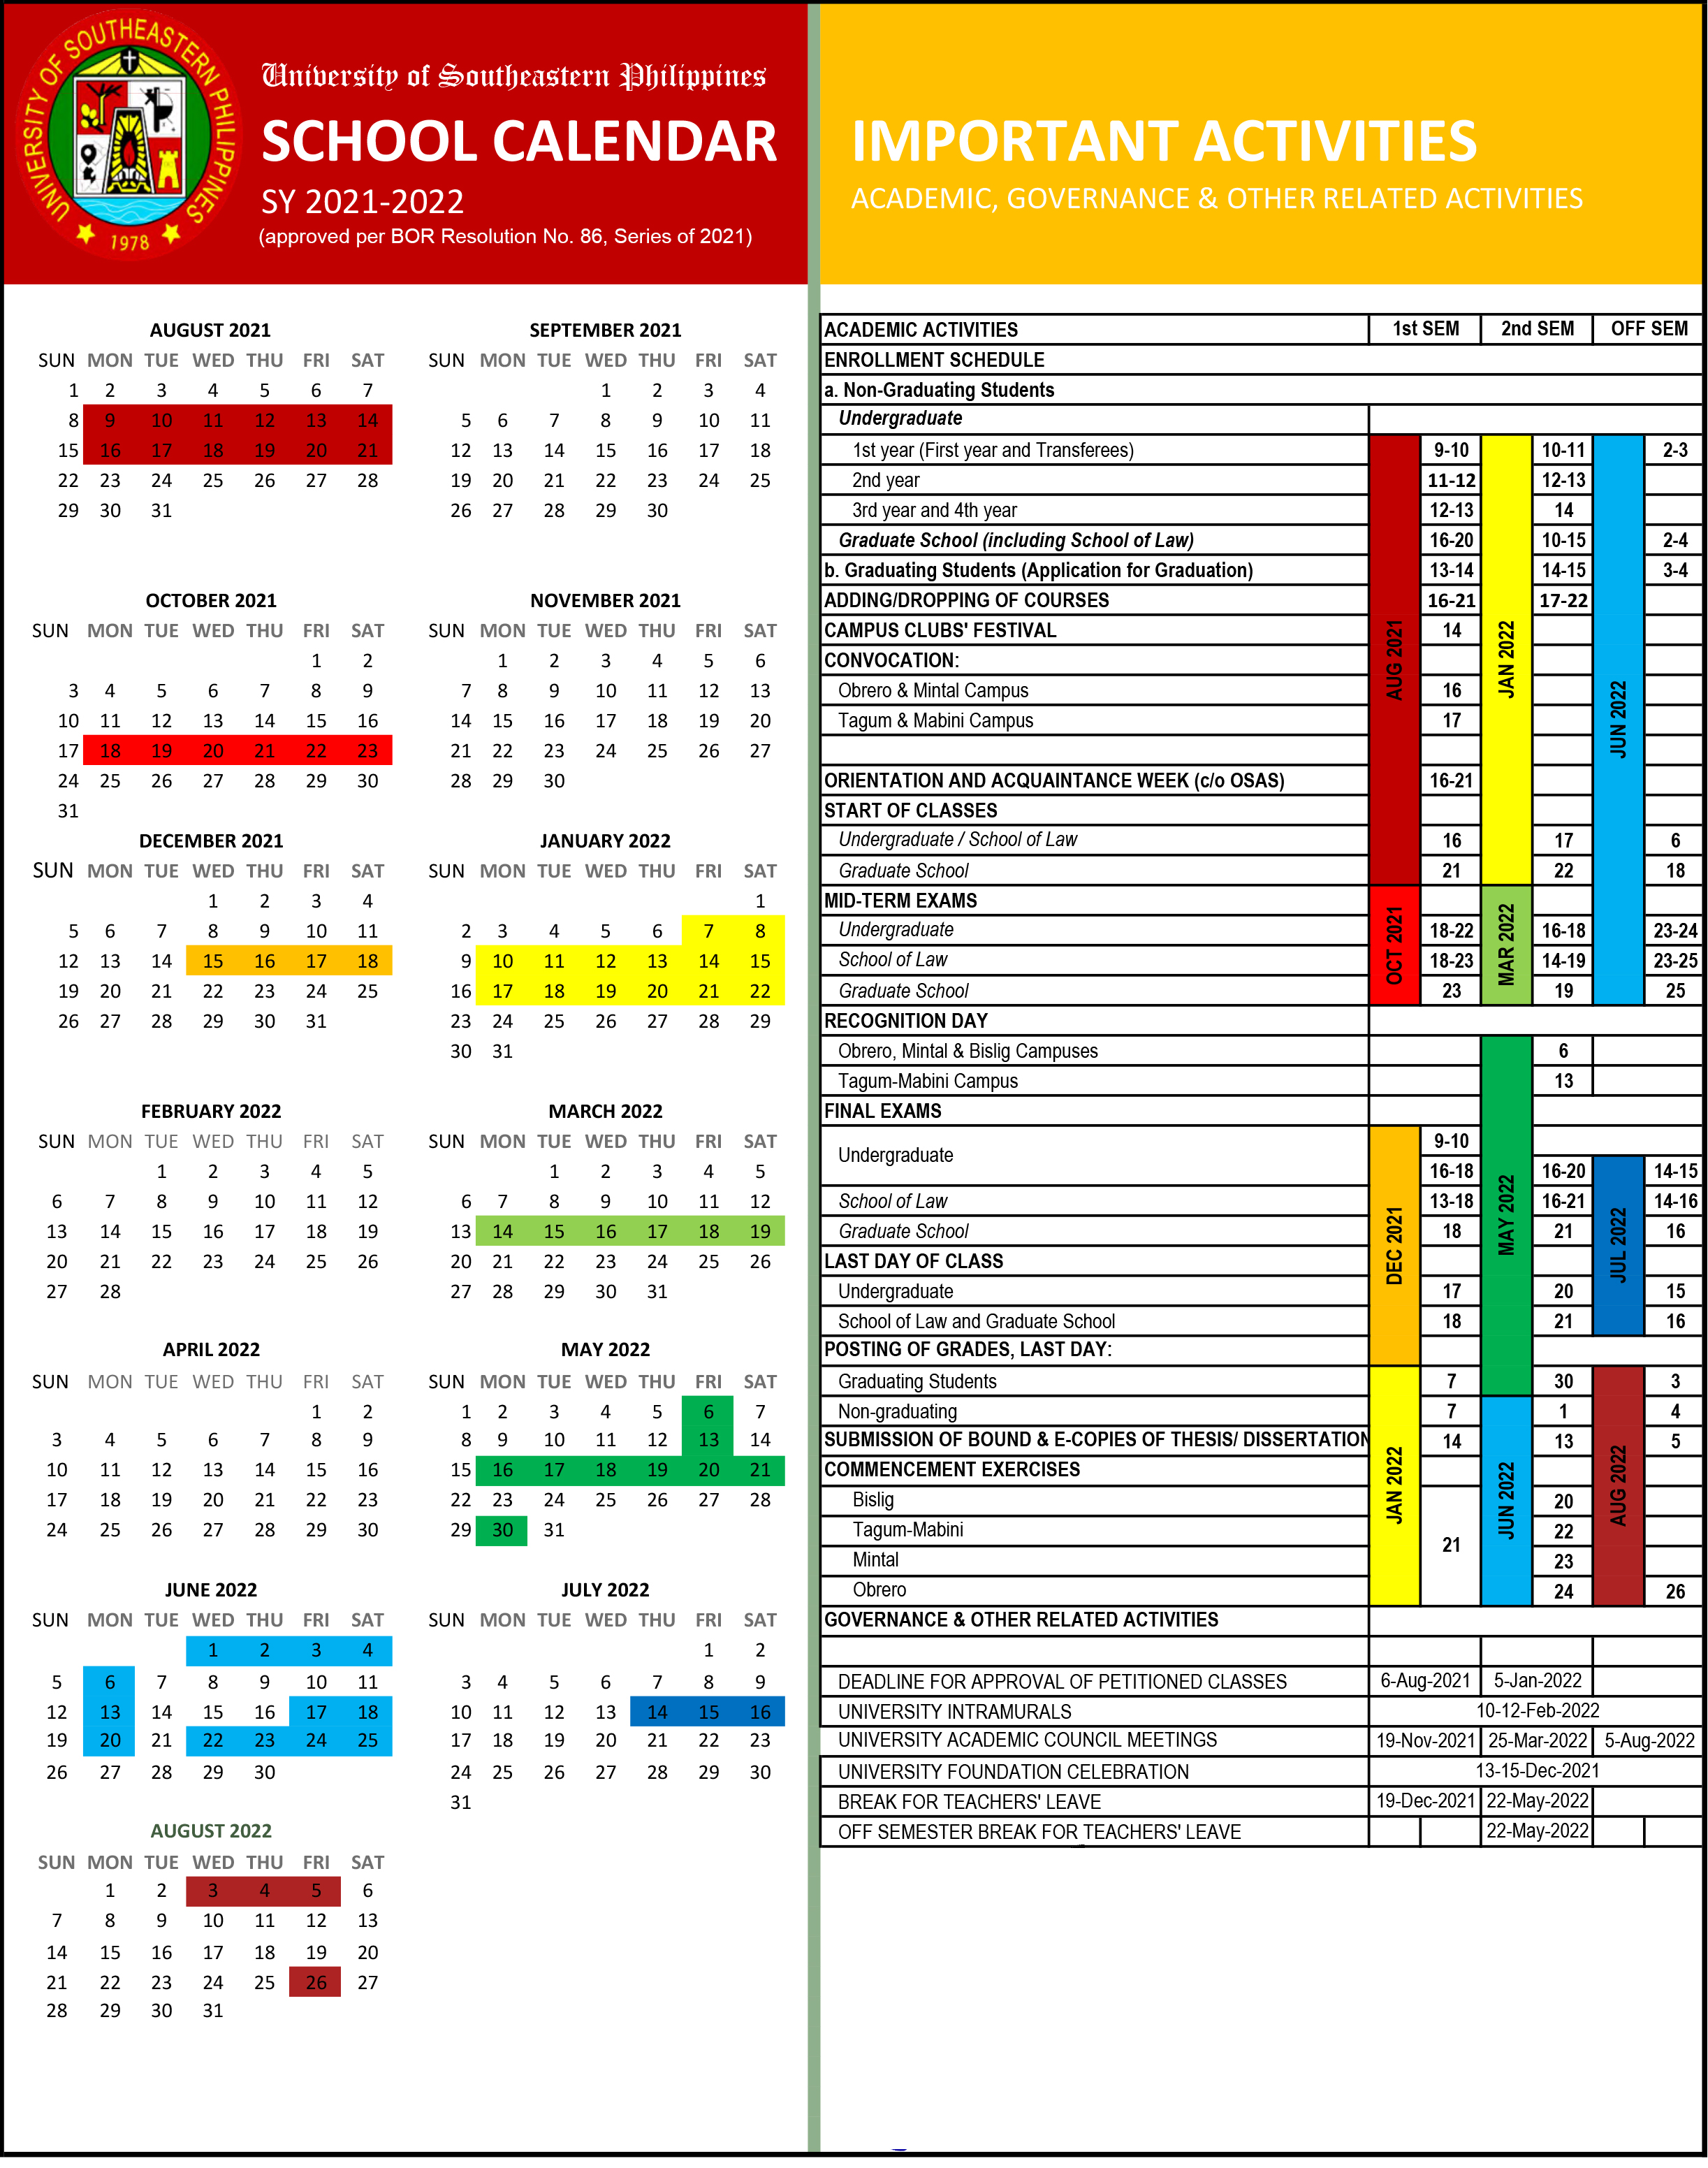 Calendar-Version1-SY2021-2022.xlsx